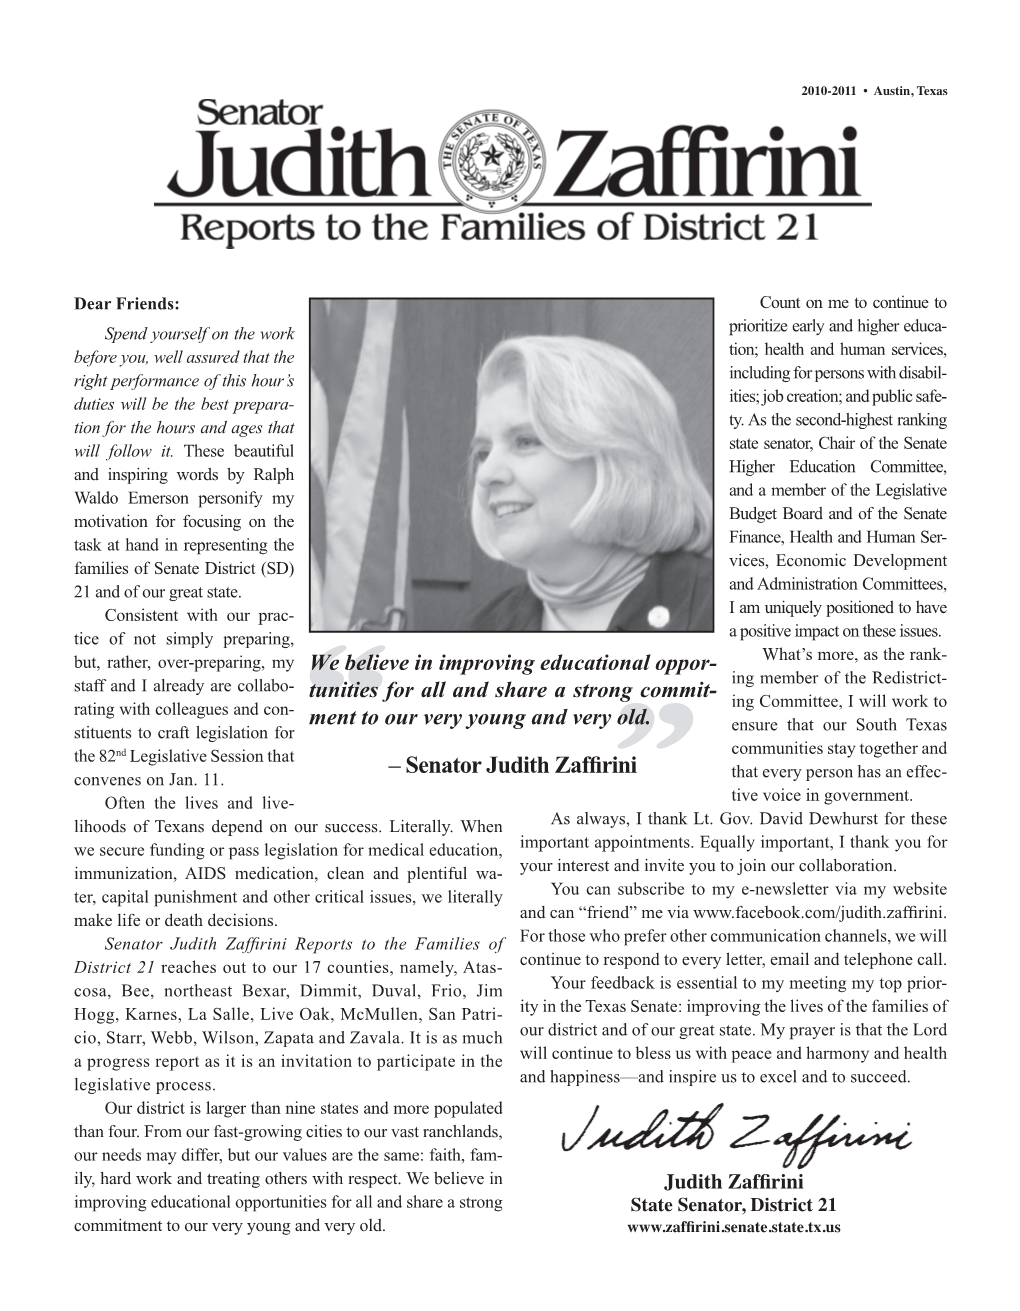 – Senator Judith Zaffirini Convenes on Jan